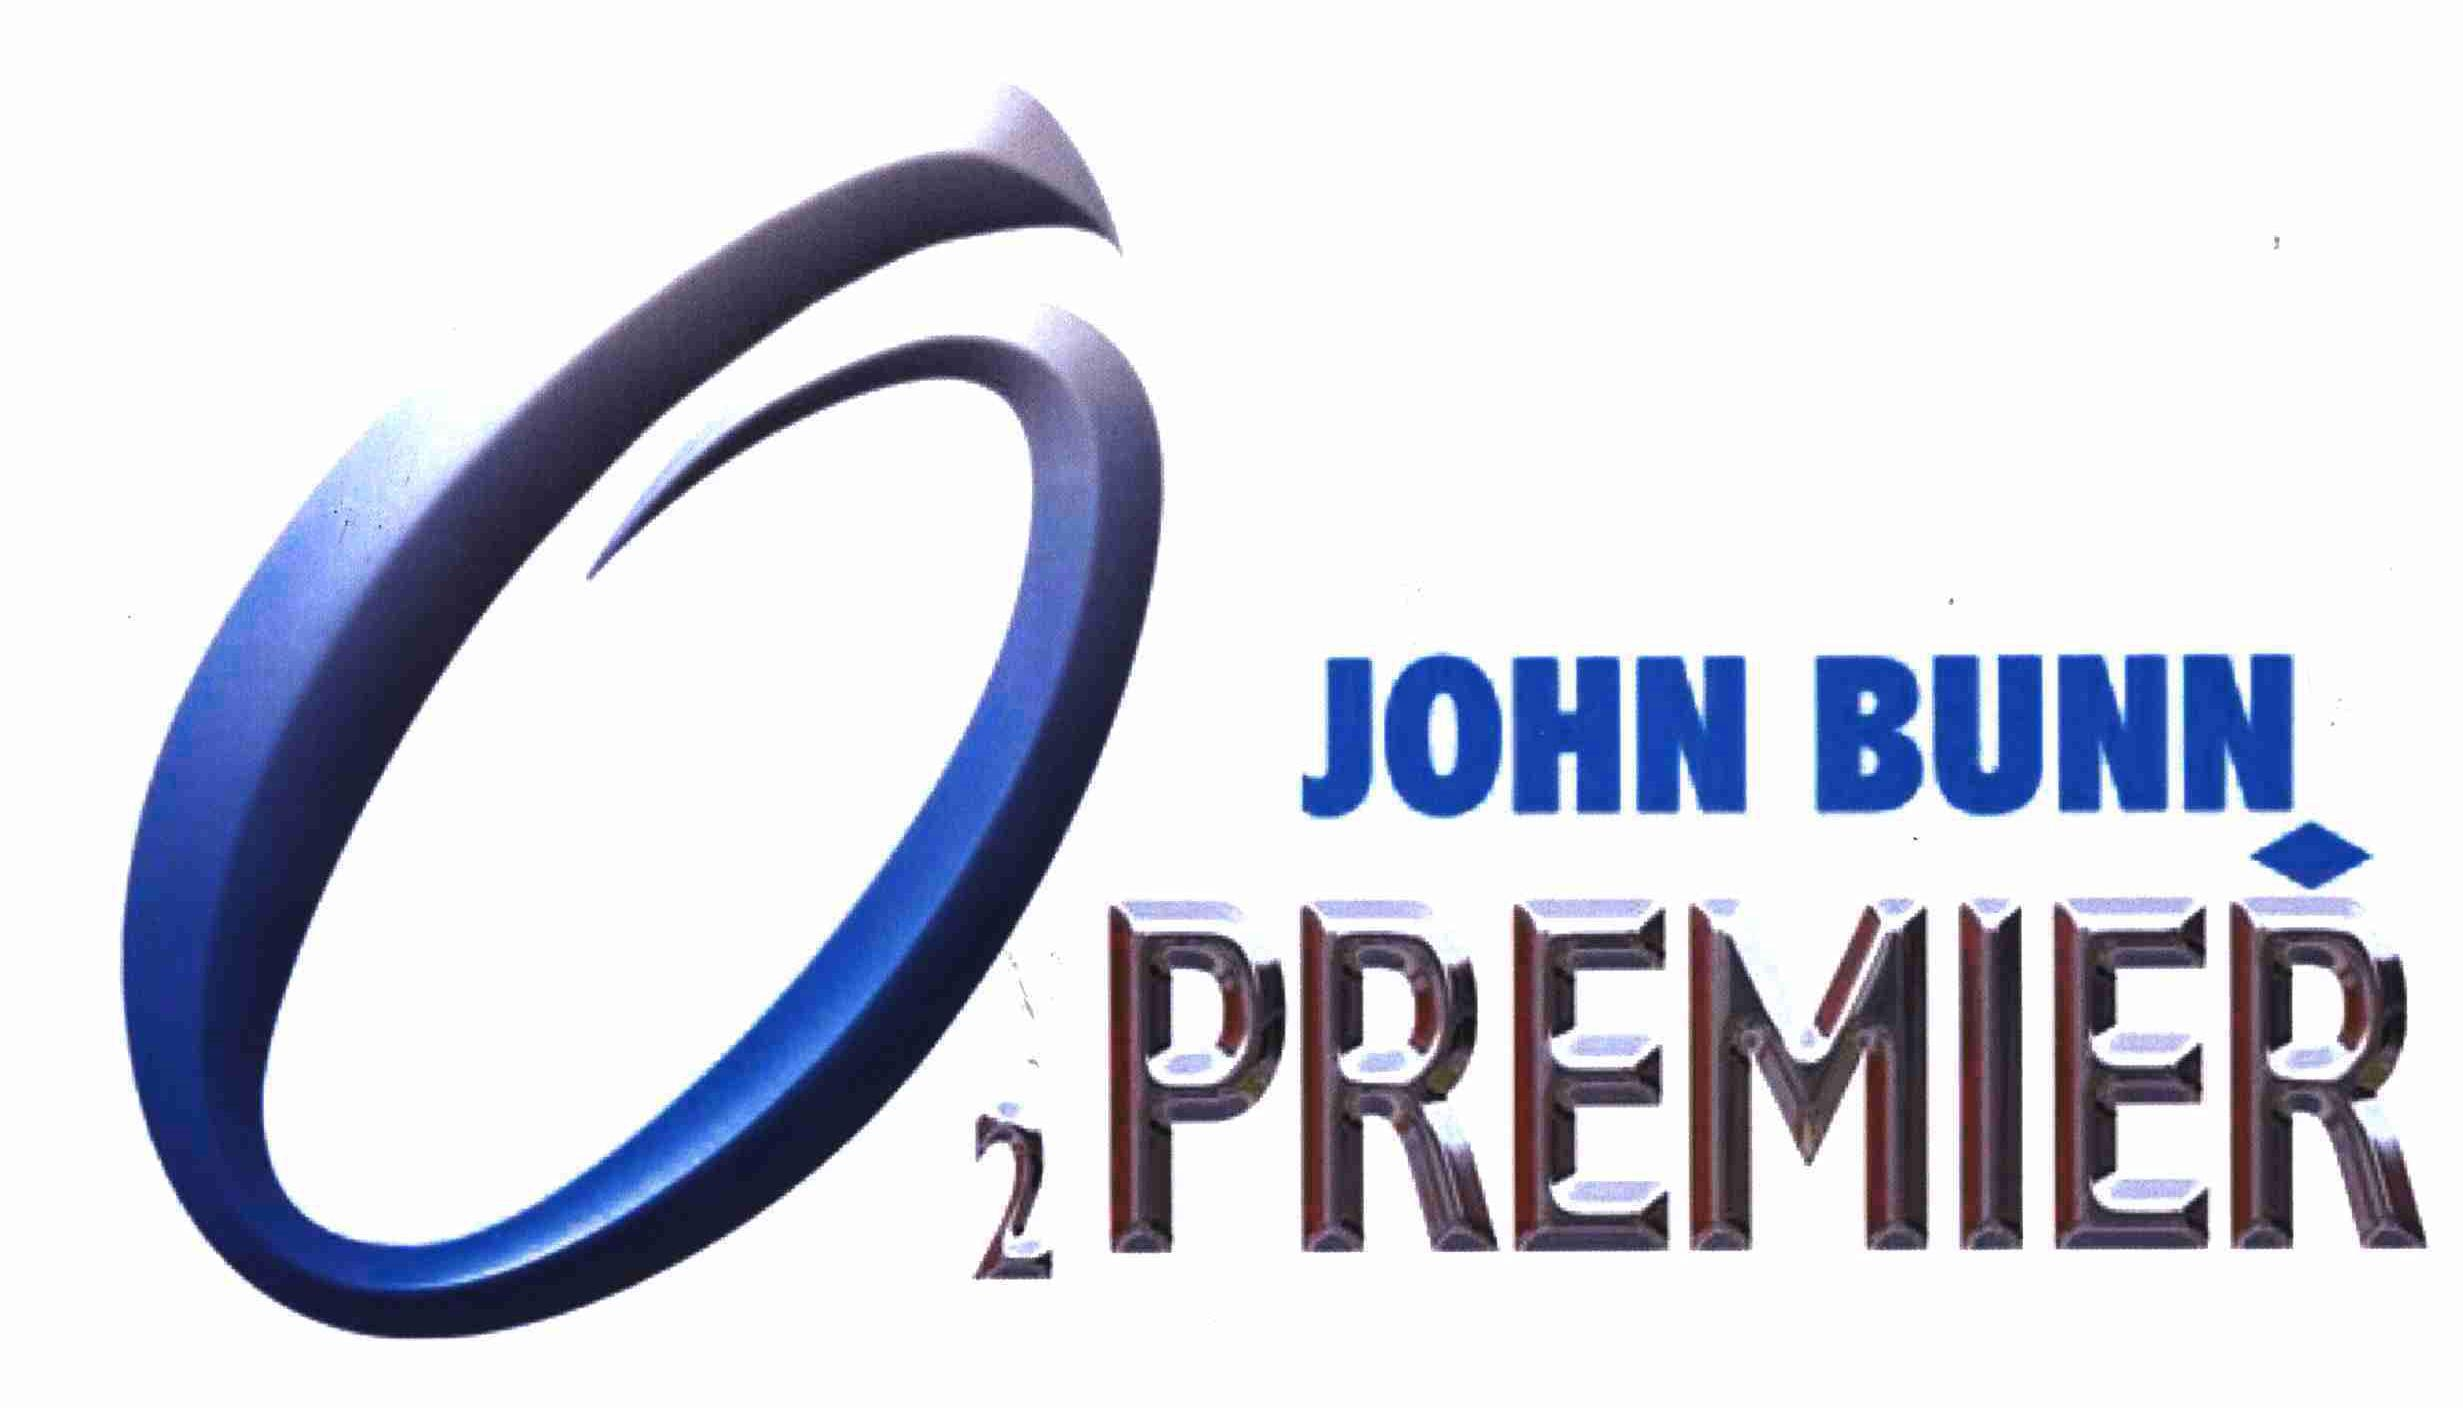  JOHN BUNN 02 PREMIER